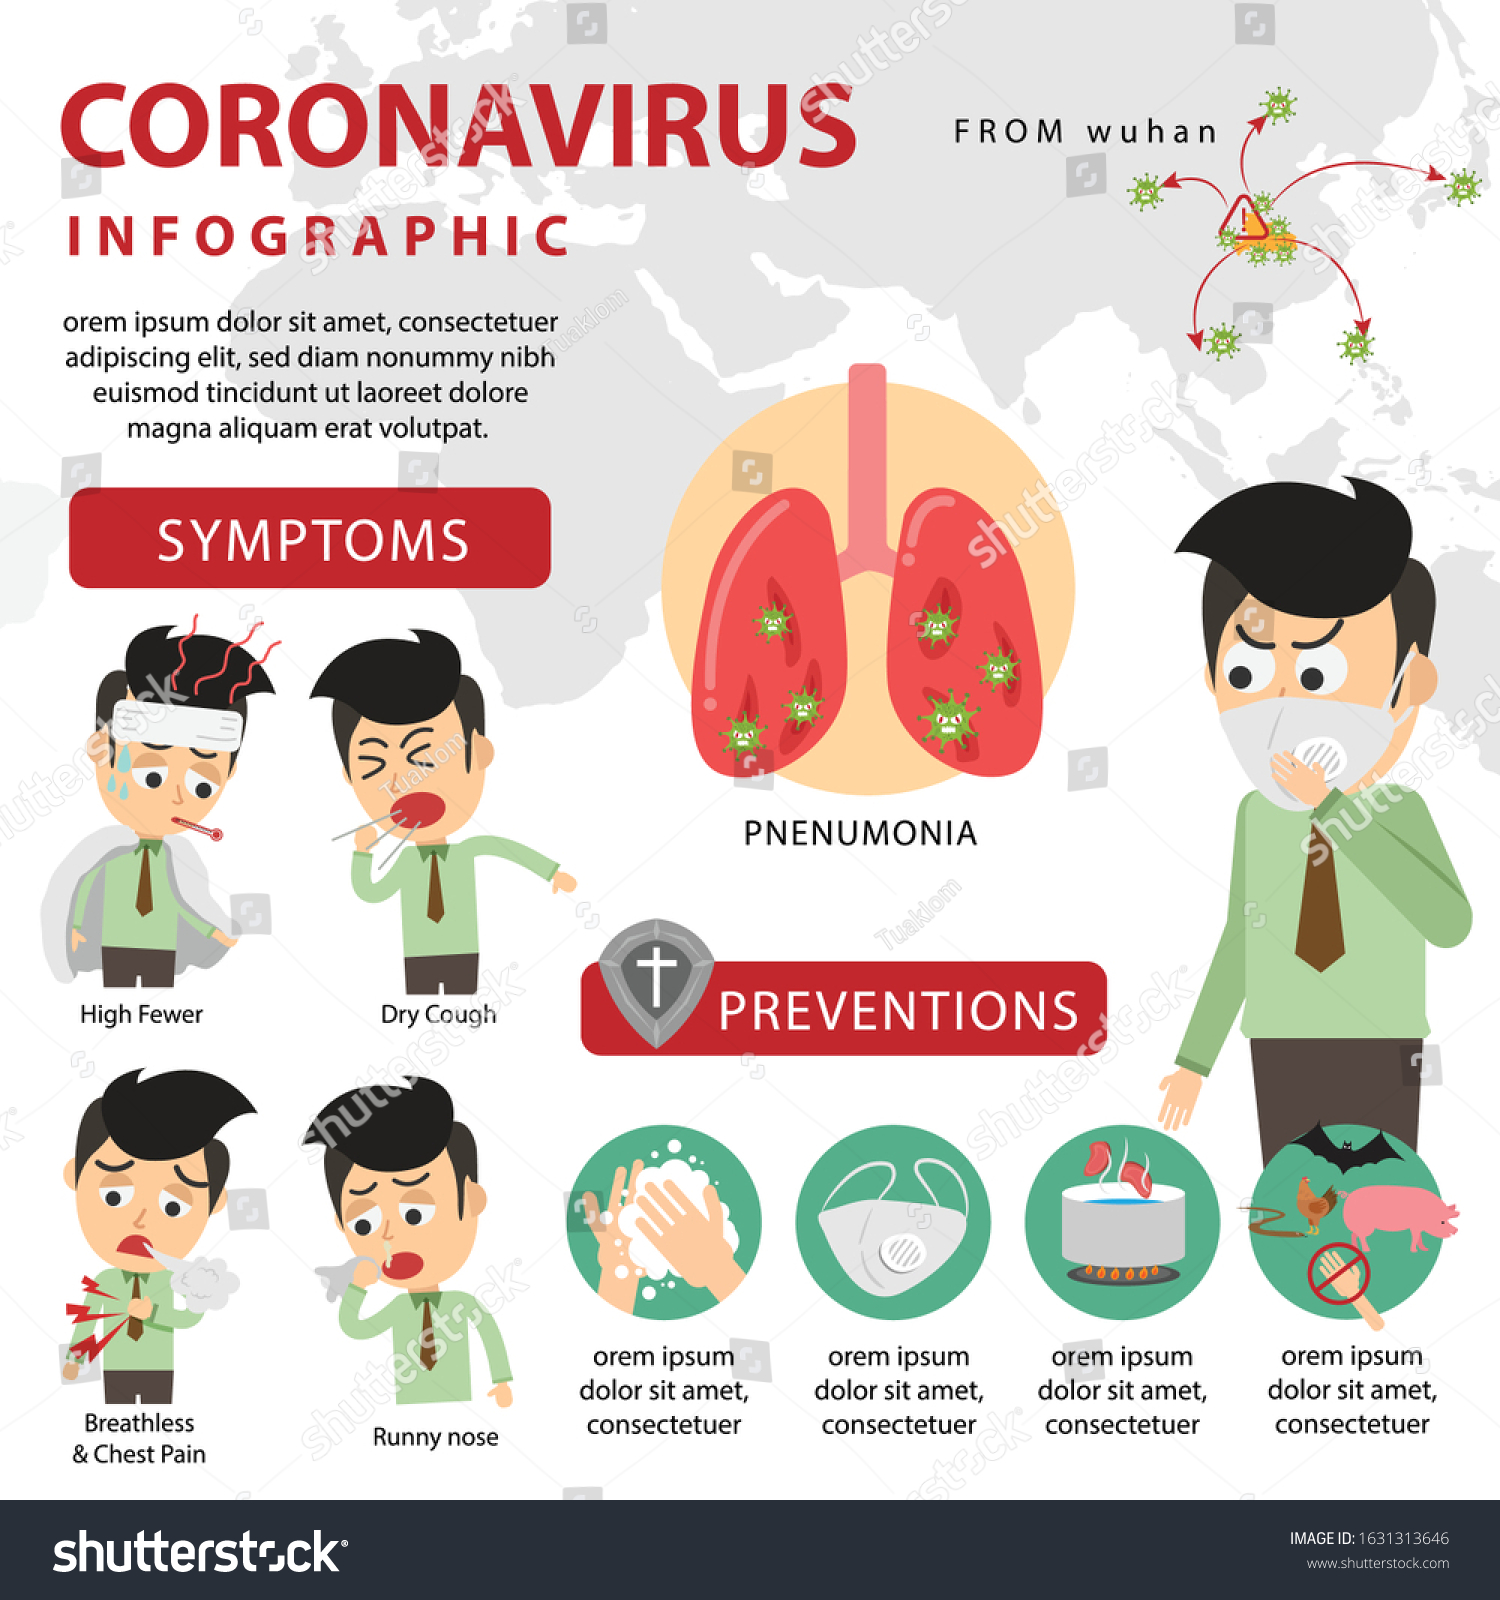 stock-vector-corona-virus-infographic-wuhan-virus-disease-man-1631313646.jpg